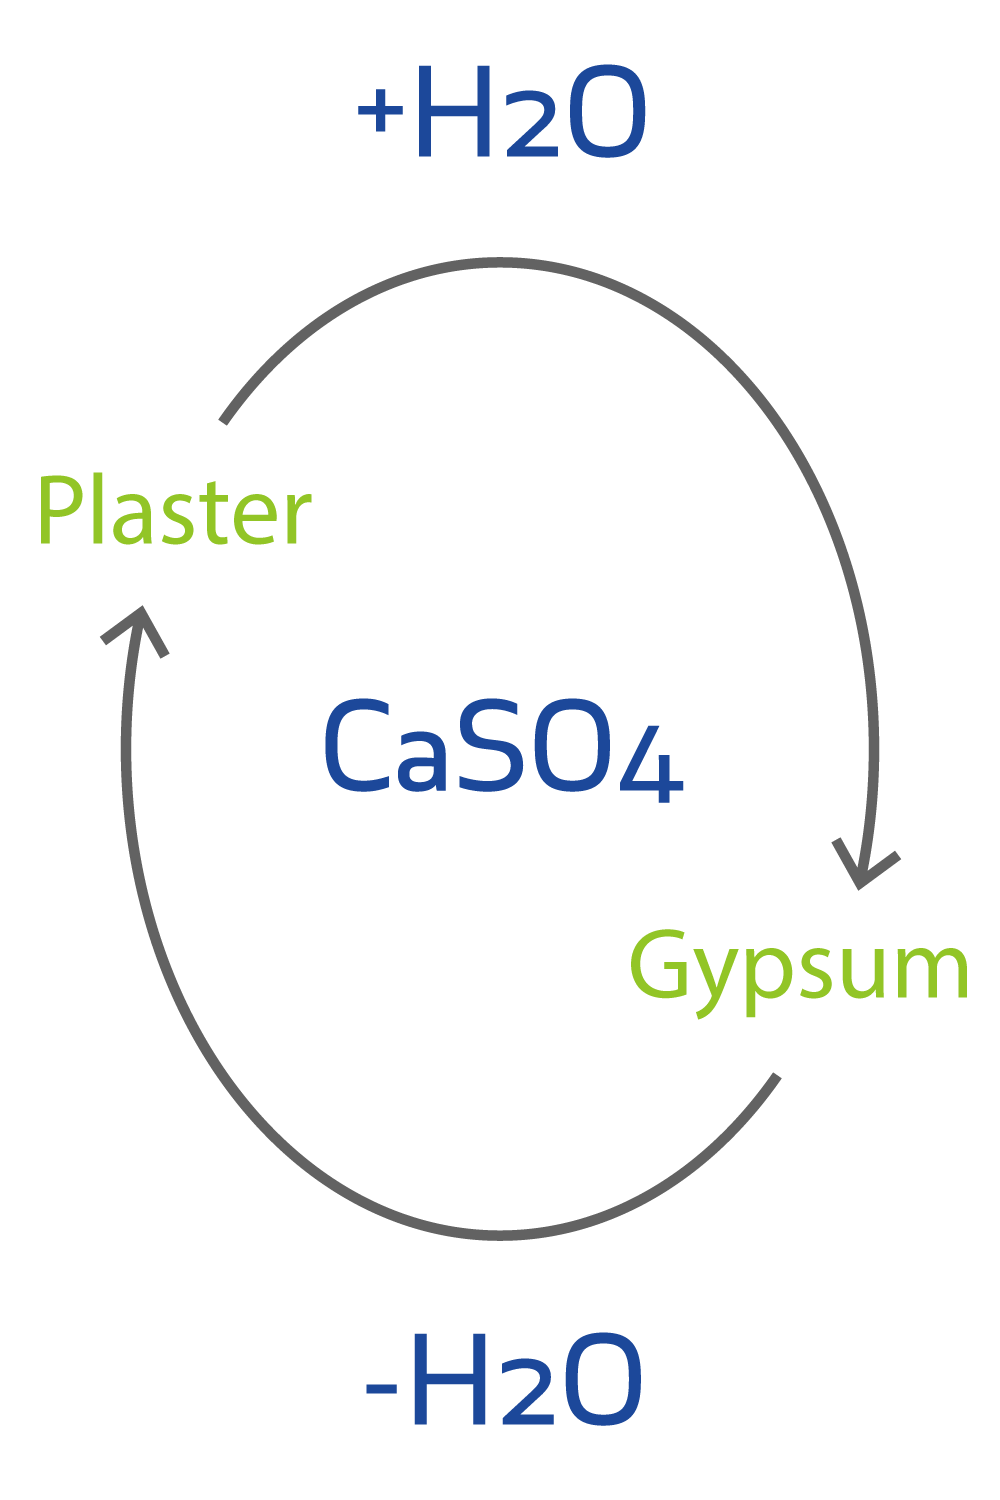 What is Gypsum